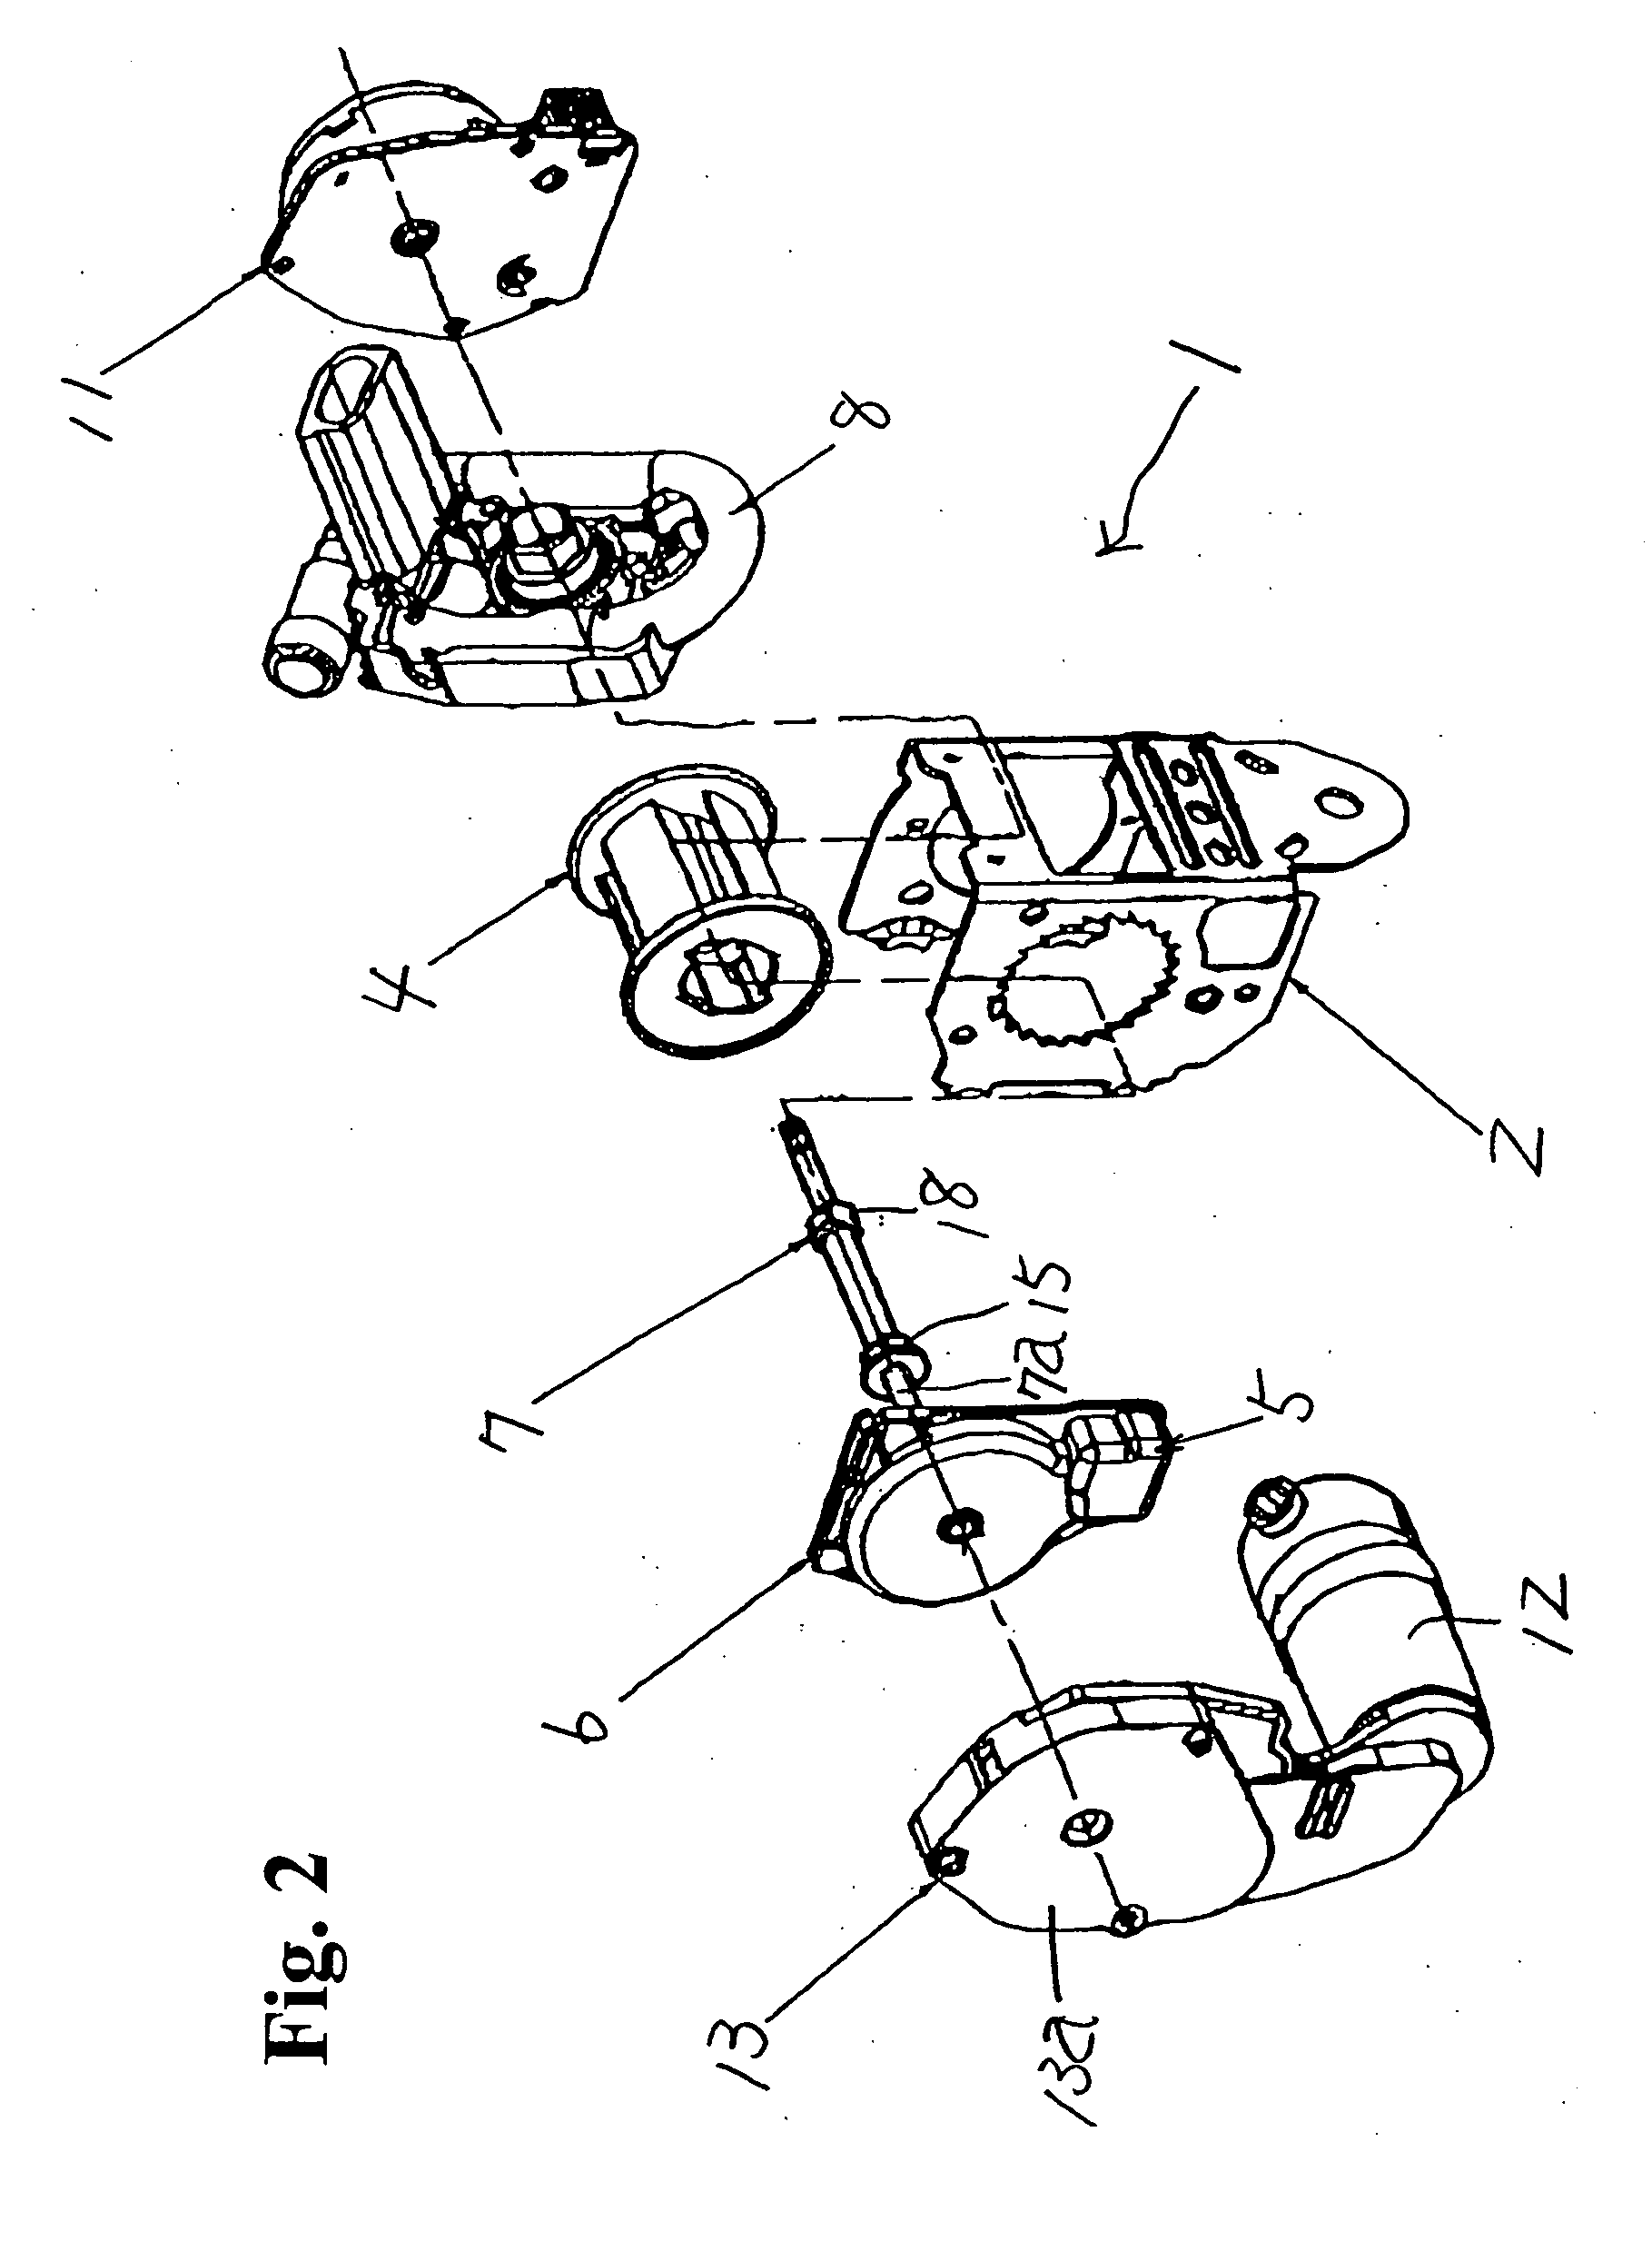 Seatbelt retractor and seatbelt device